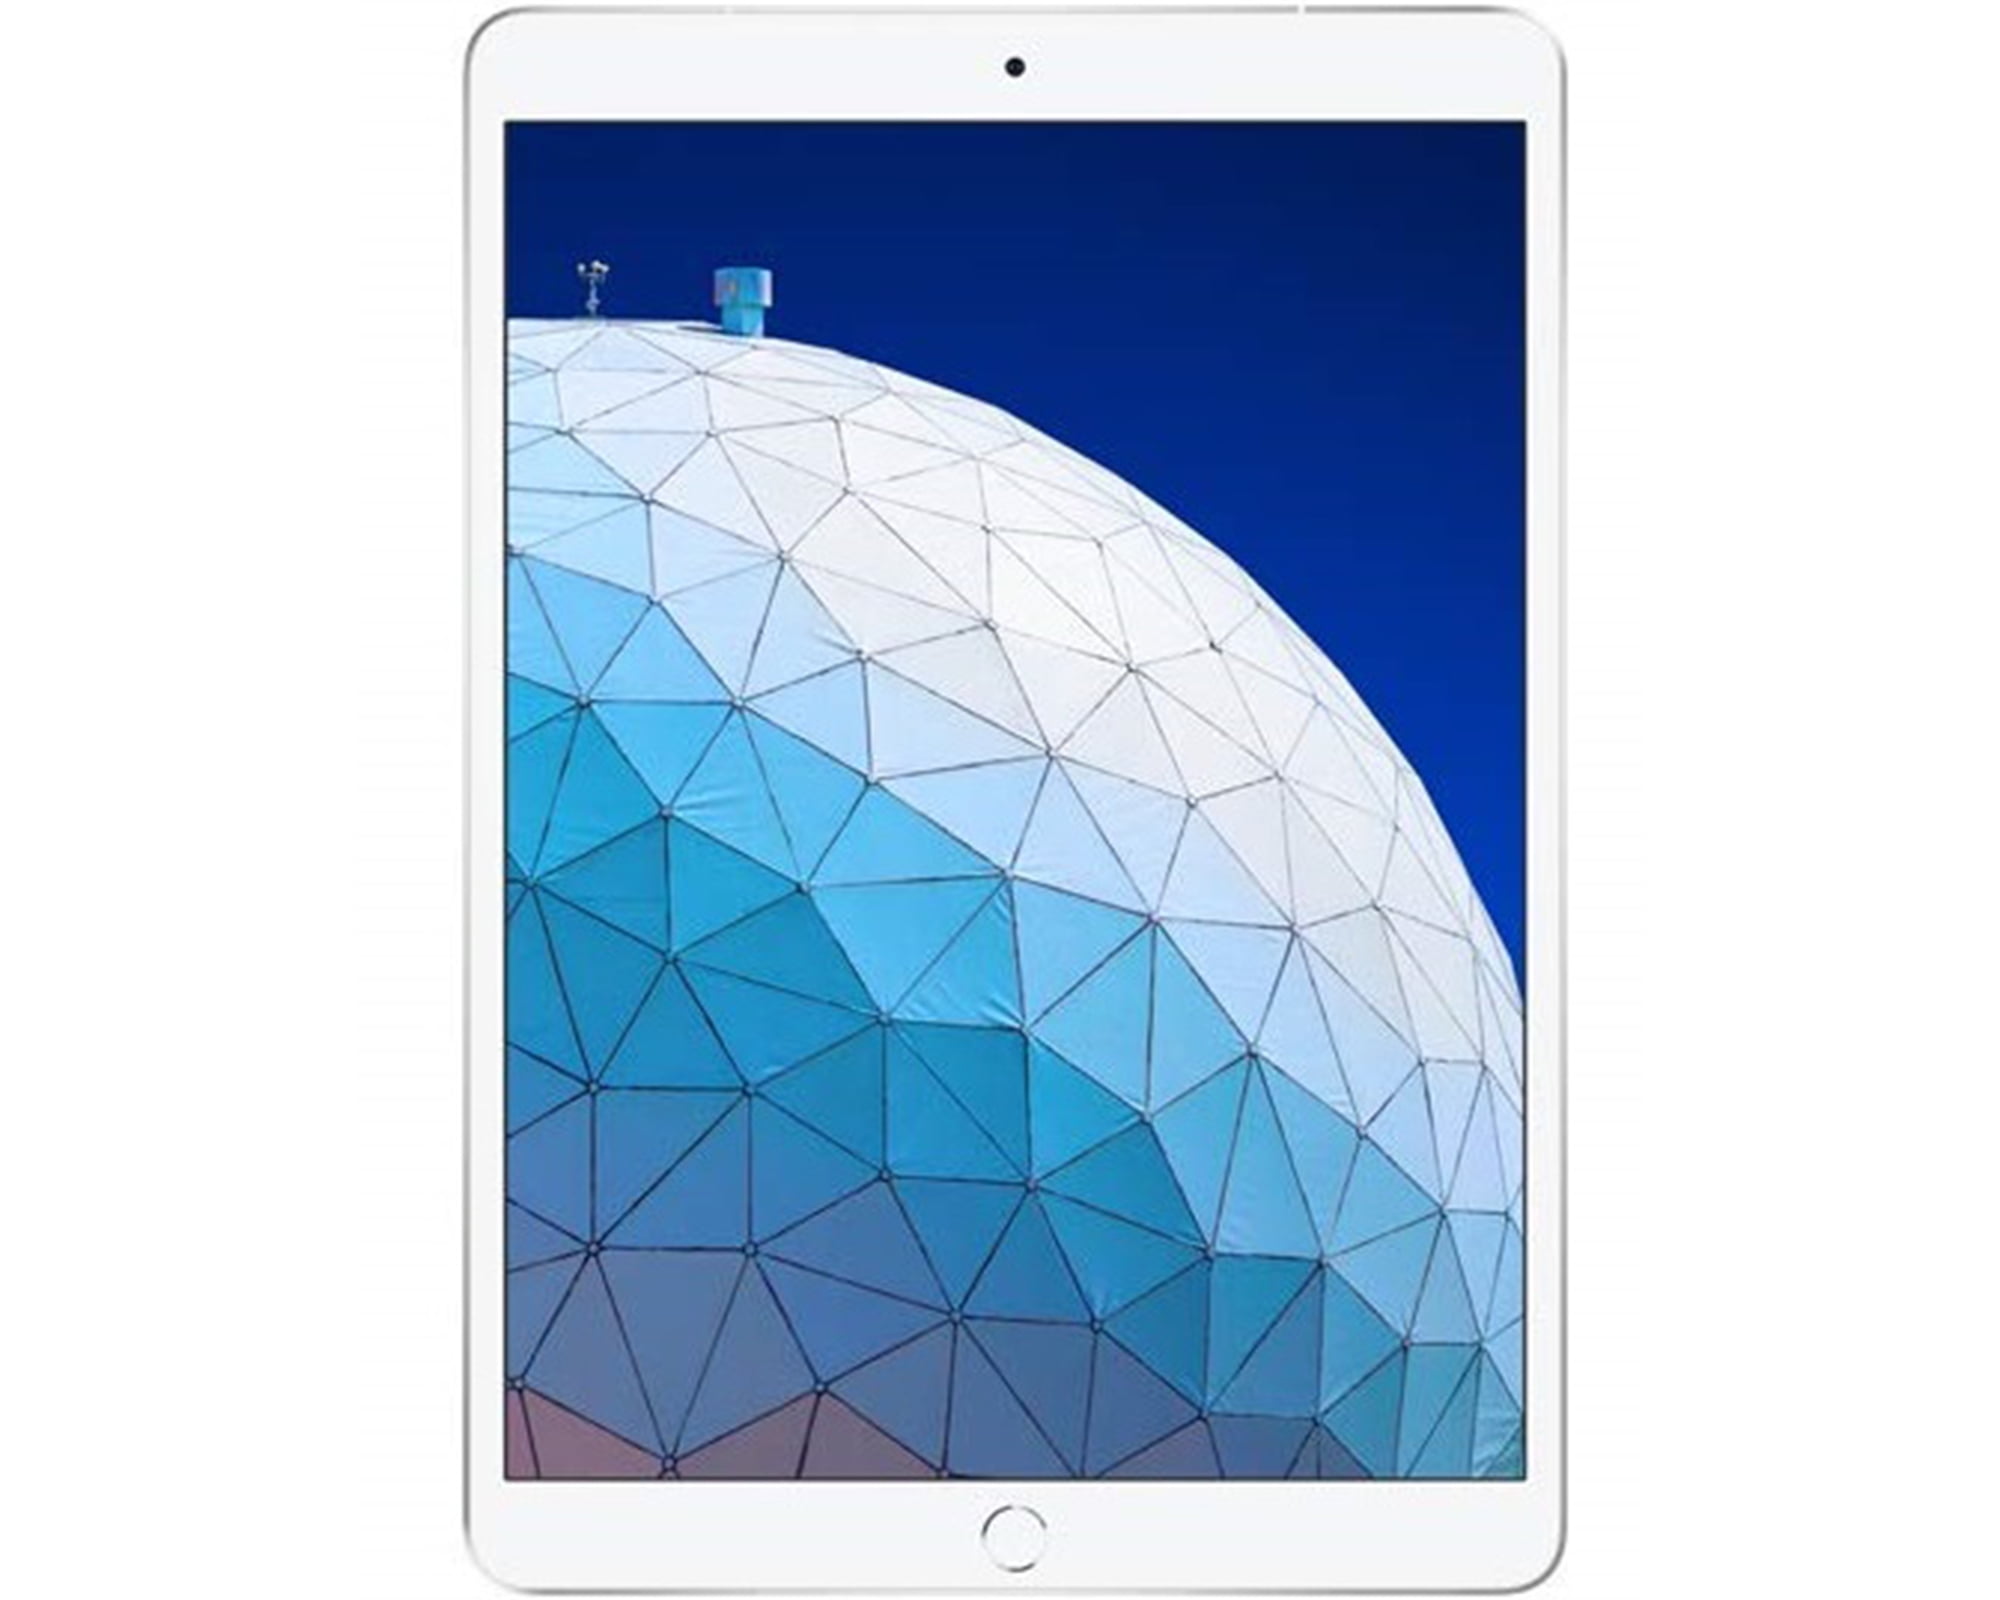 Apple iPad Air 2 64GB Silver (WiFi) Used A